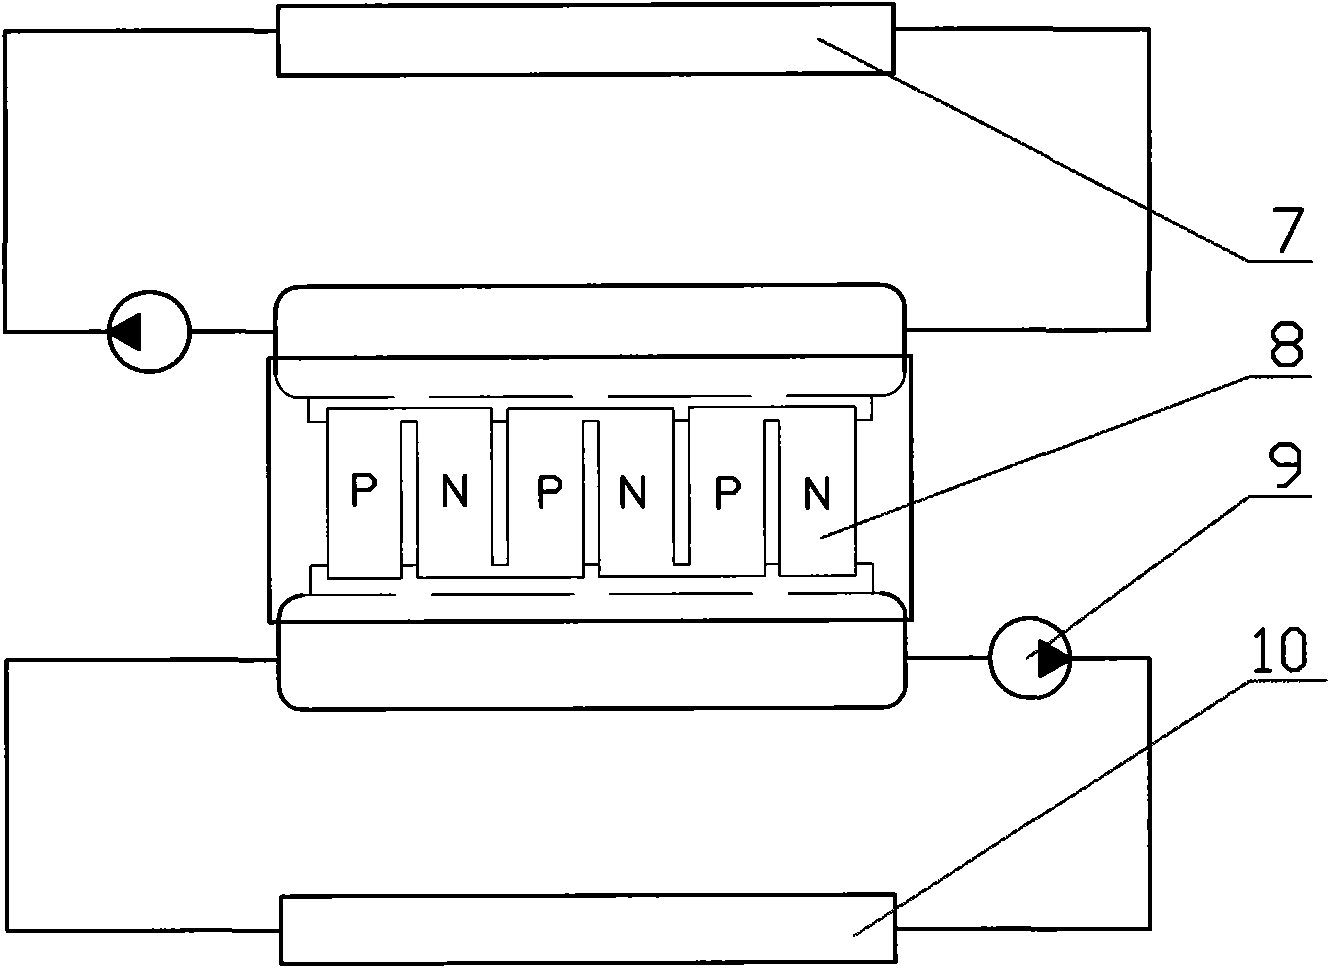 Semiconductor refrigeration system